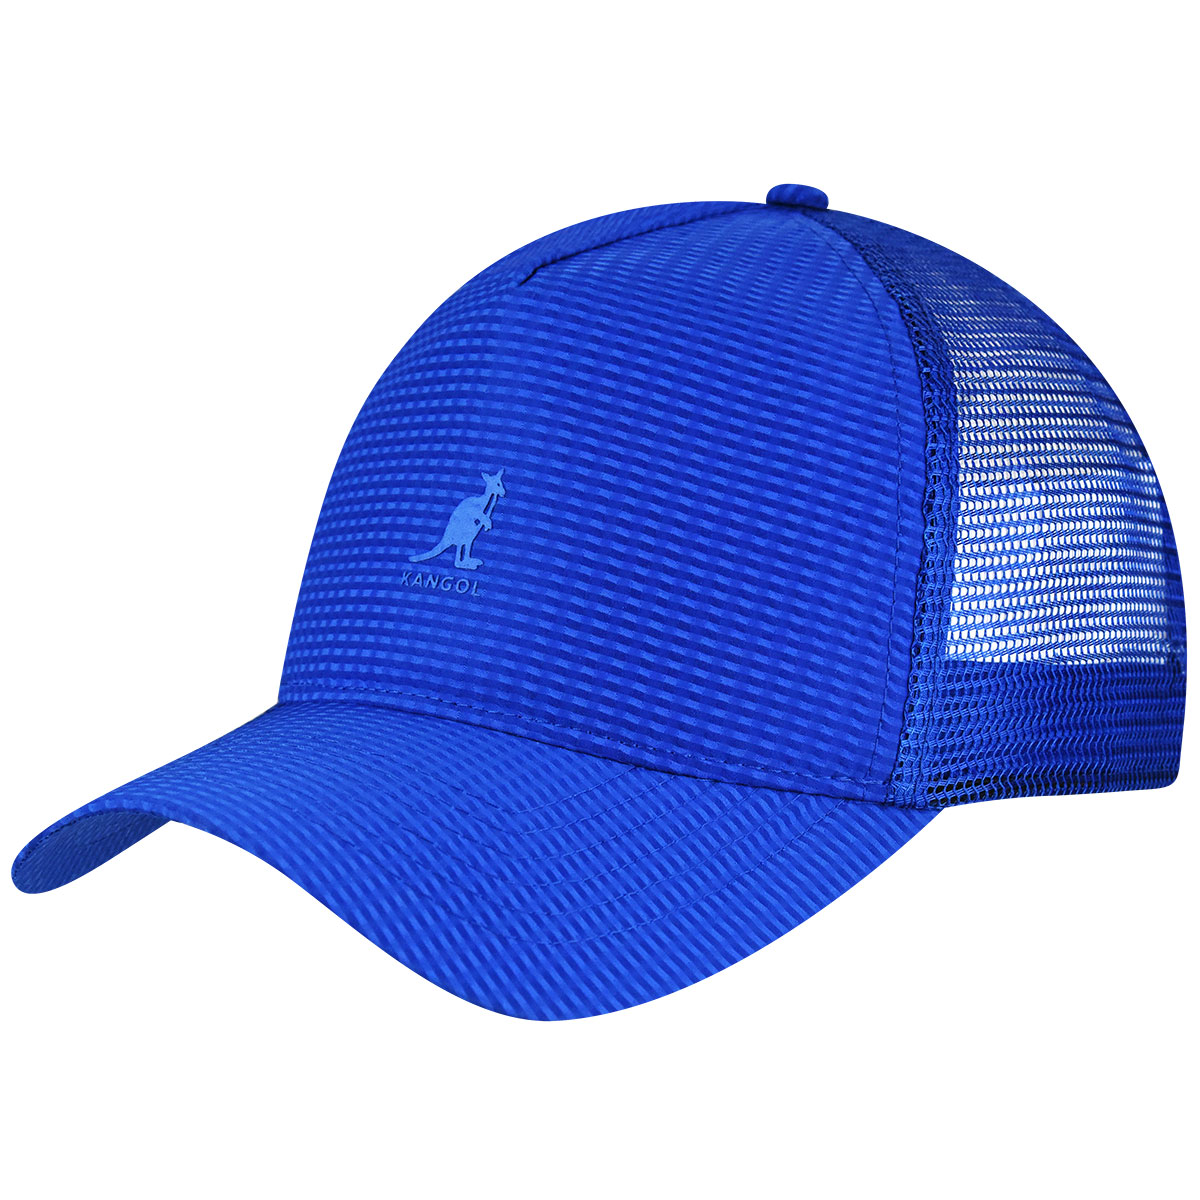 Hats - Blue